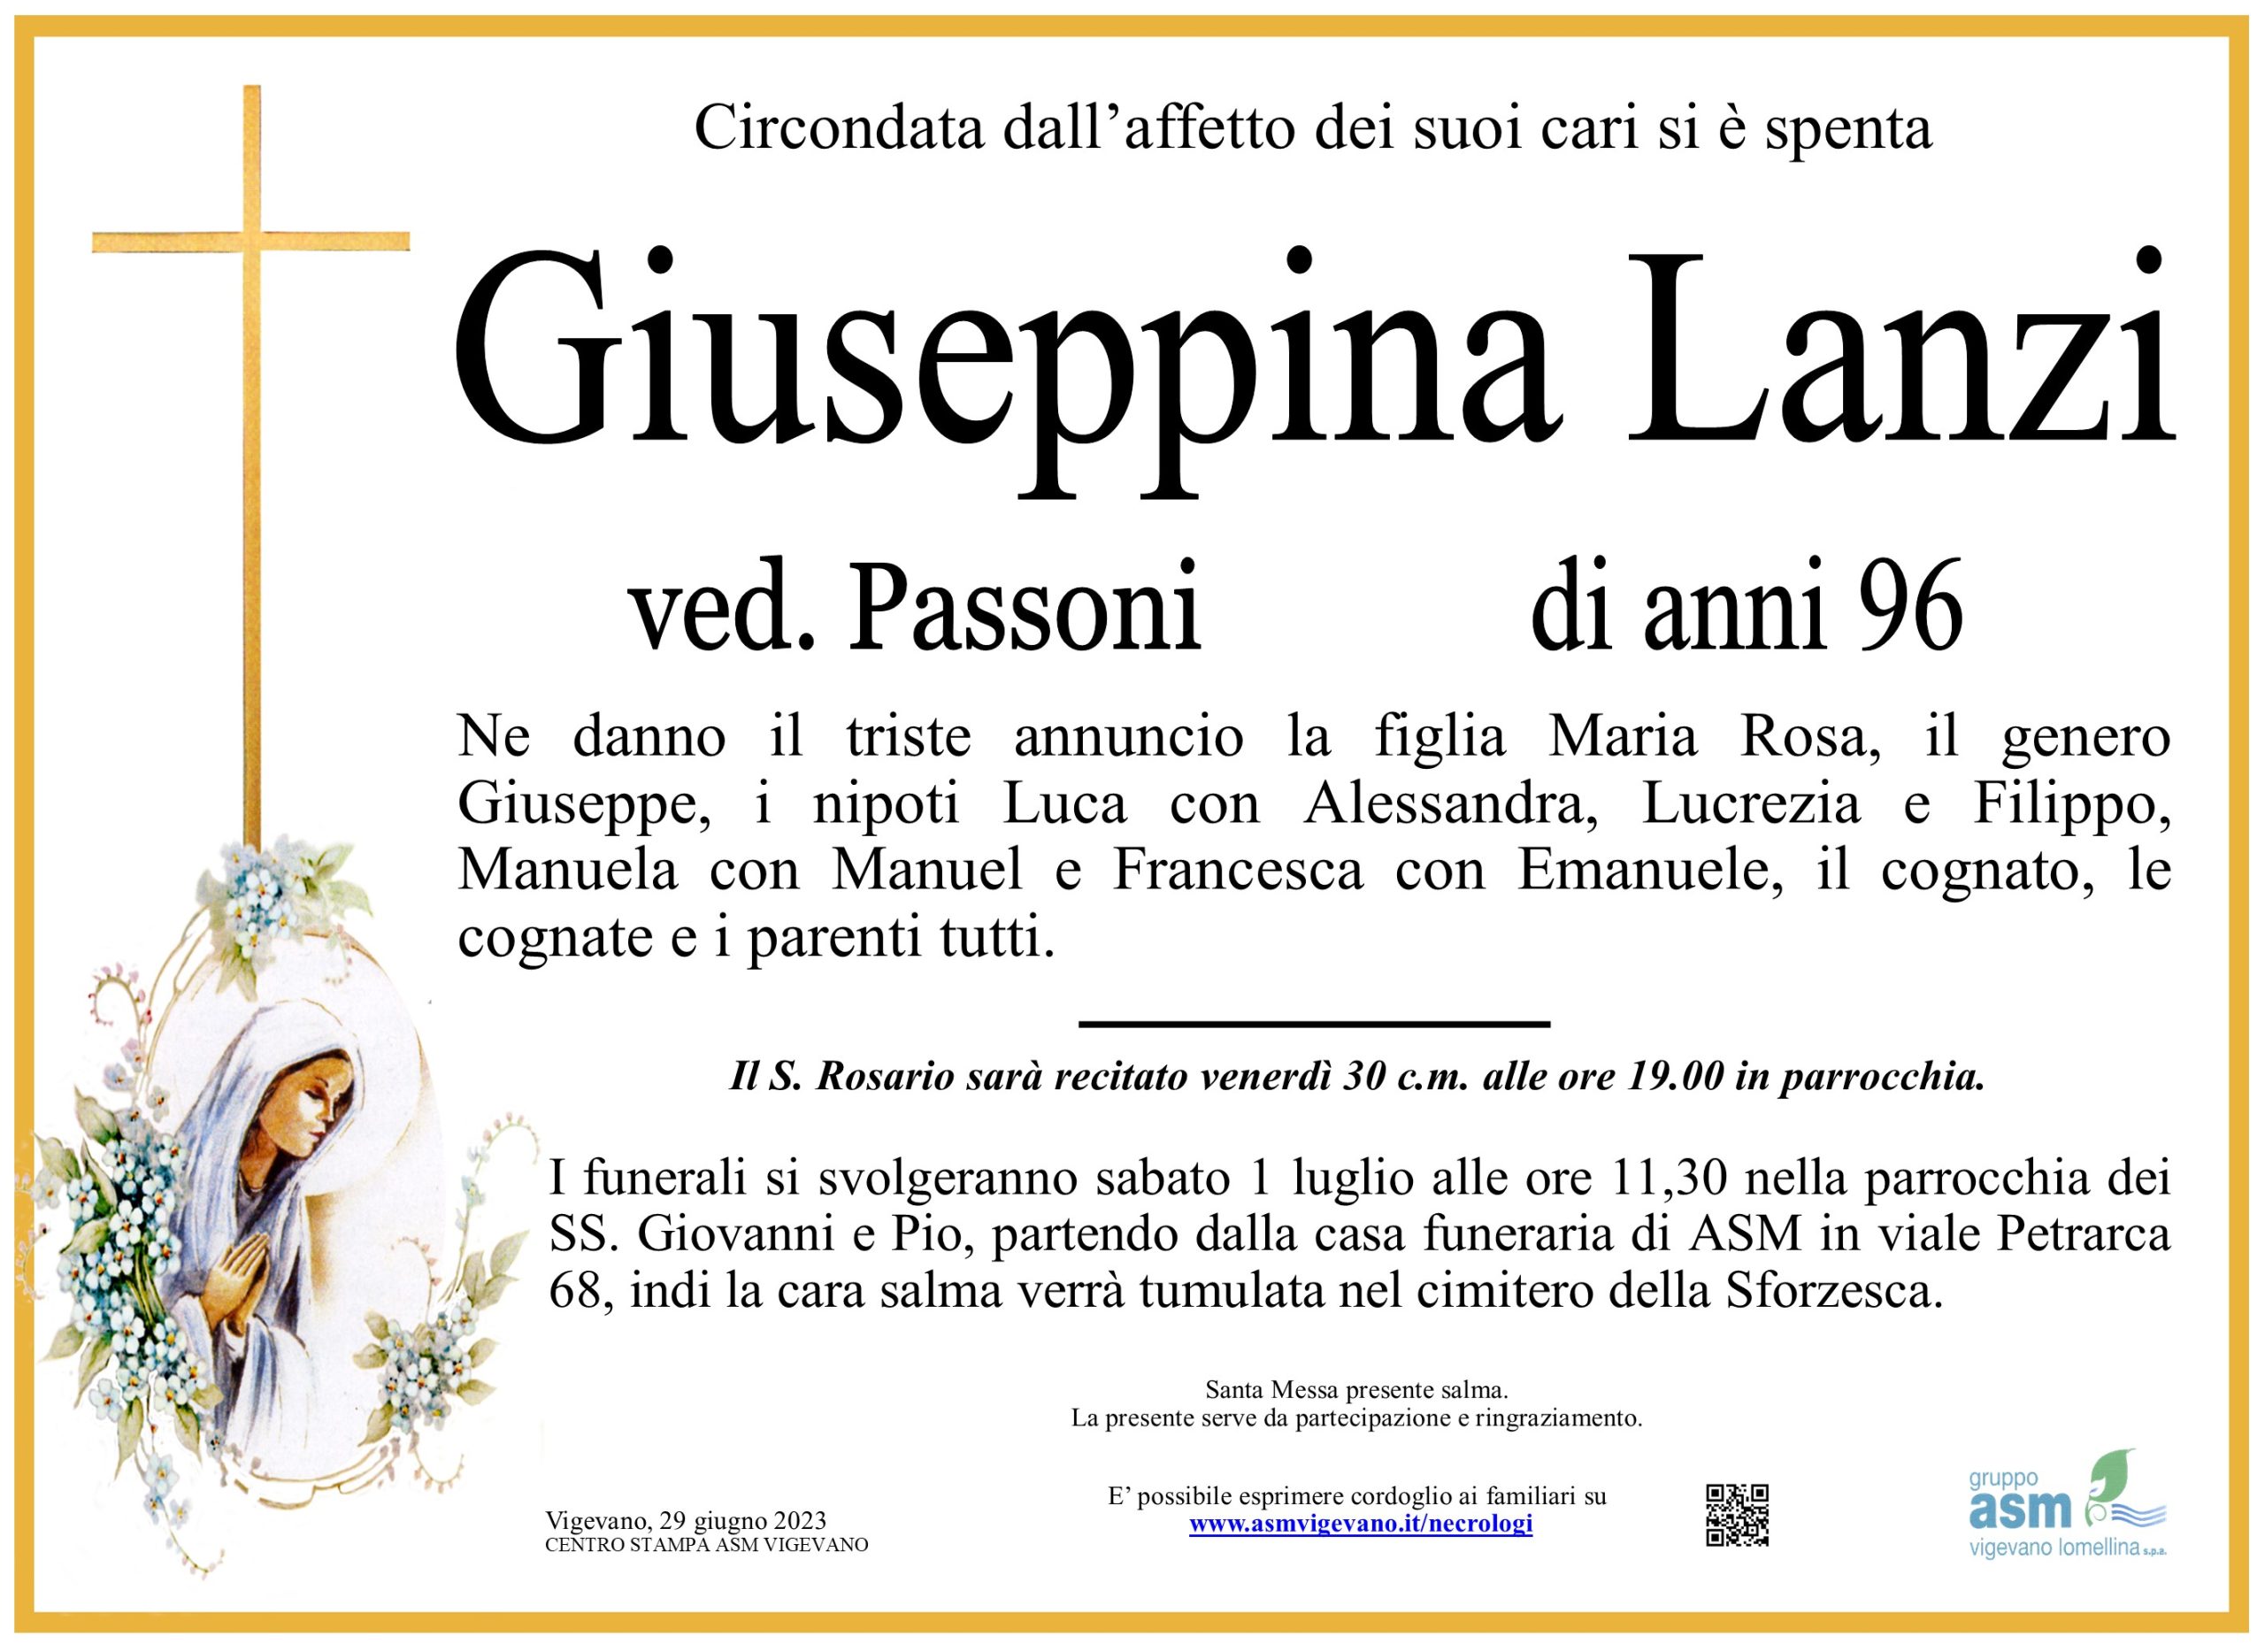 Giuseppina Lanzi